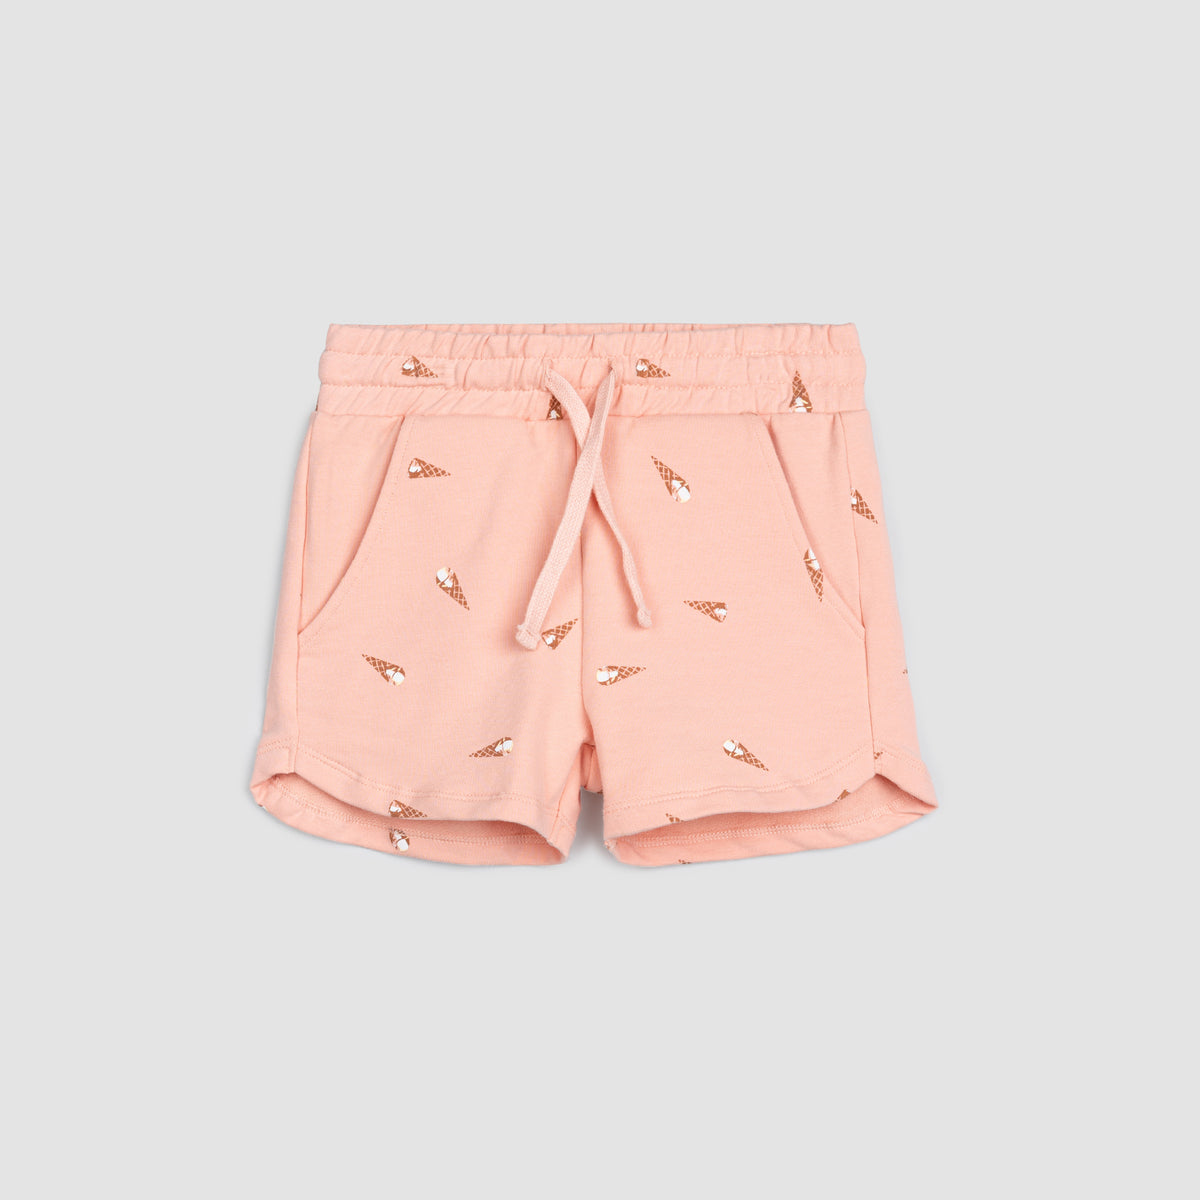 New Summer Ladies 100% Cotton Crepe Solid Color Shorts Multicolor